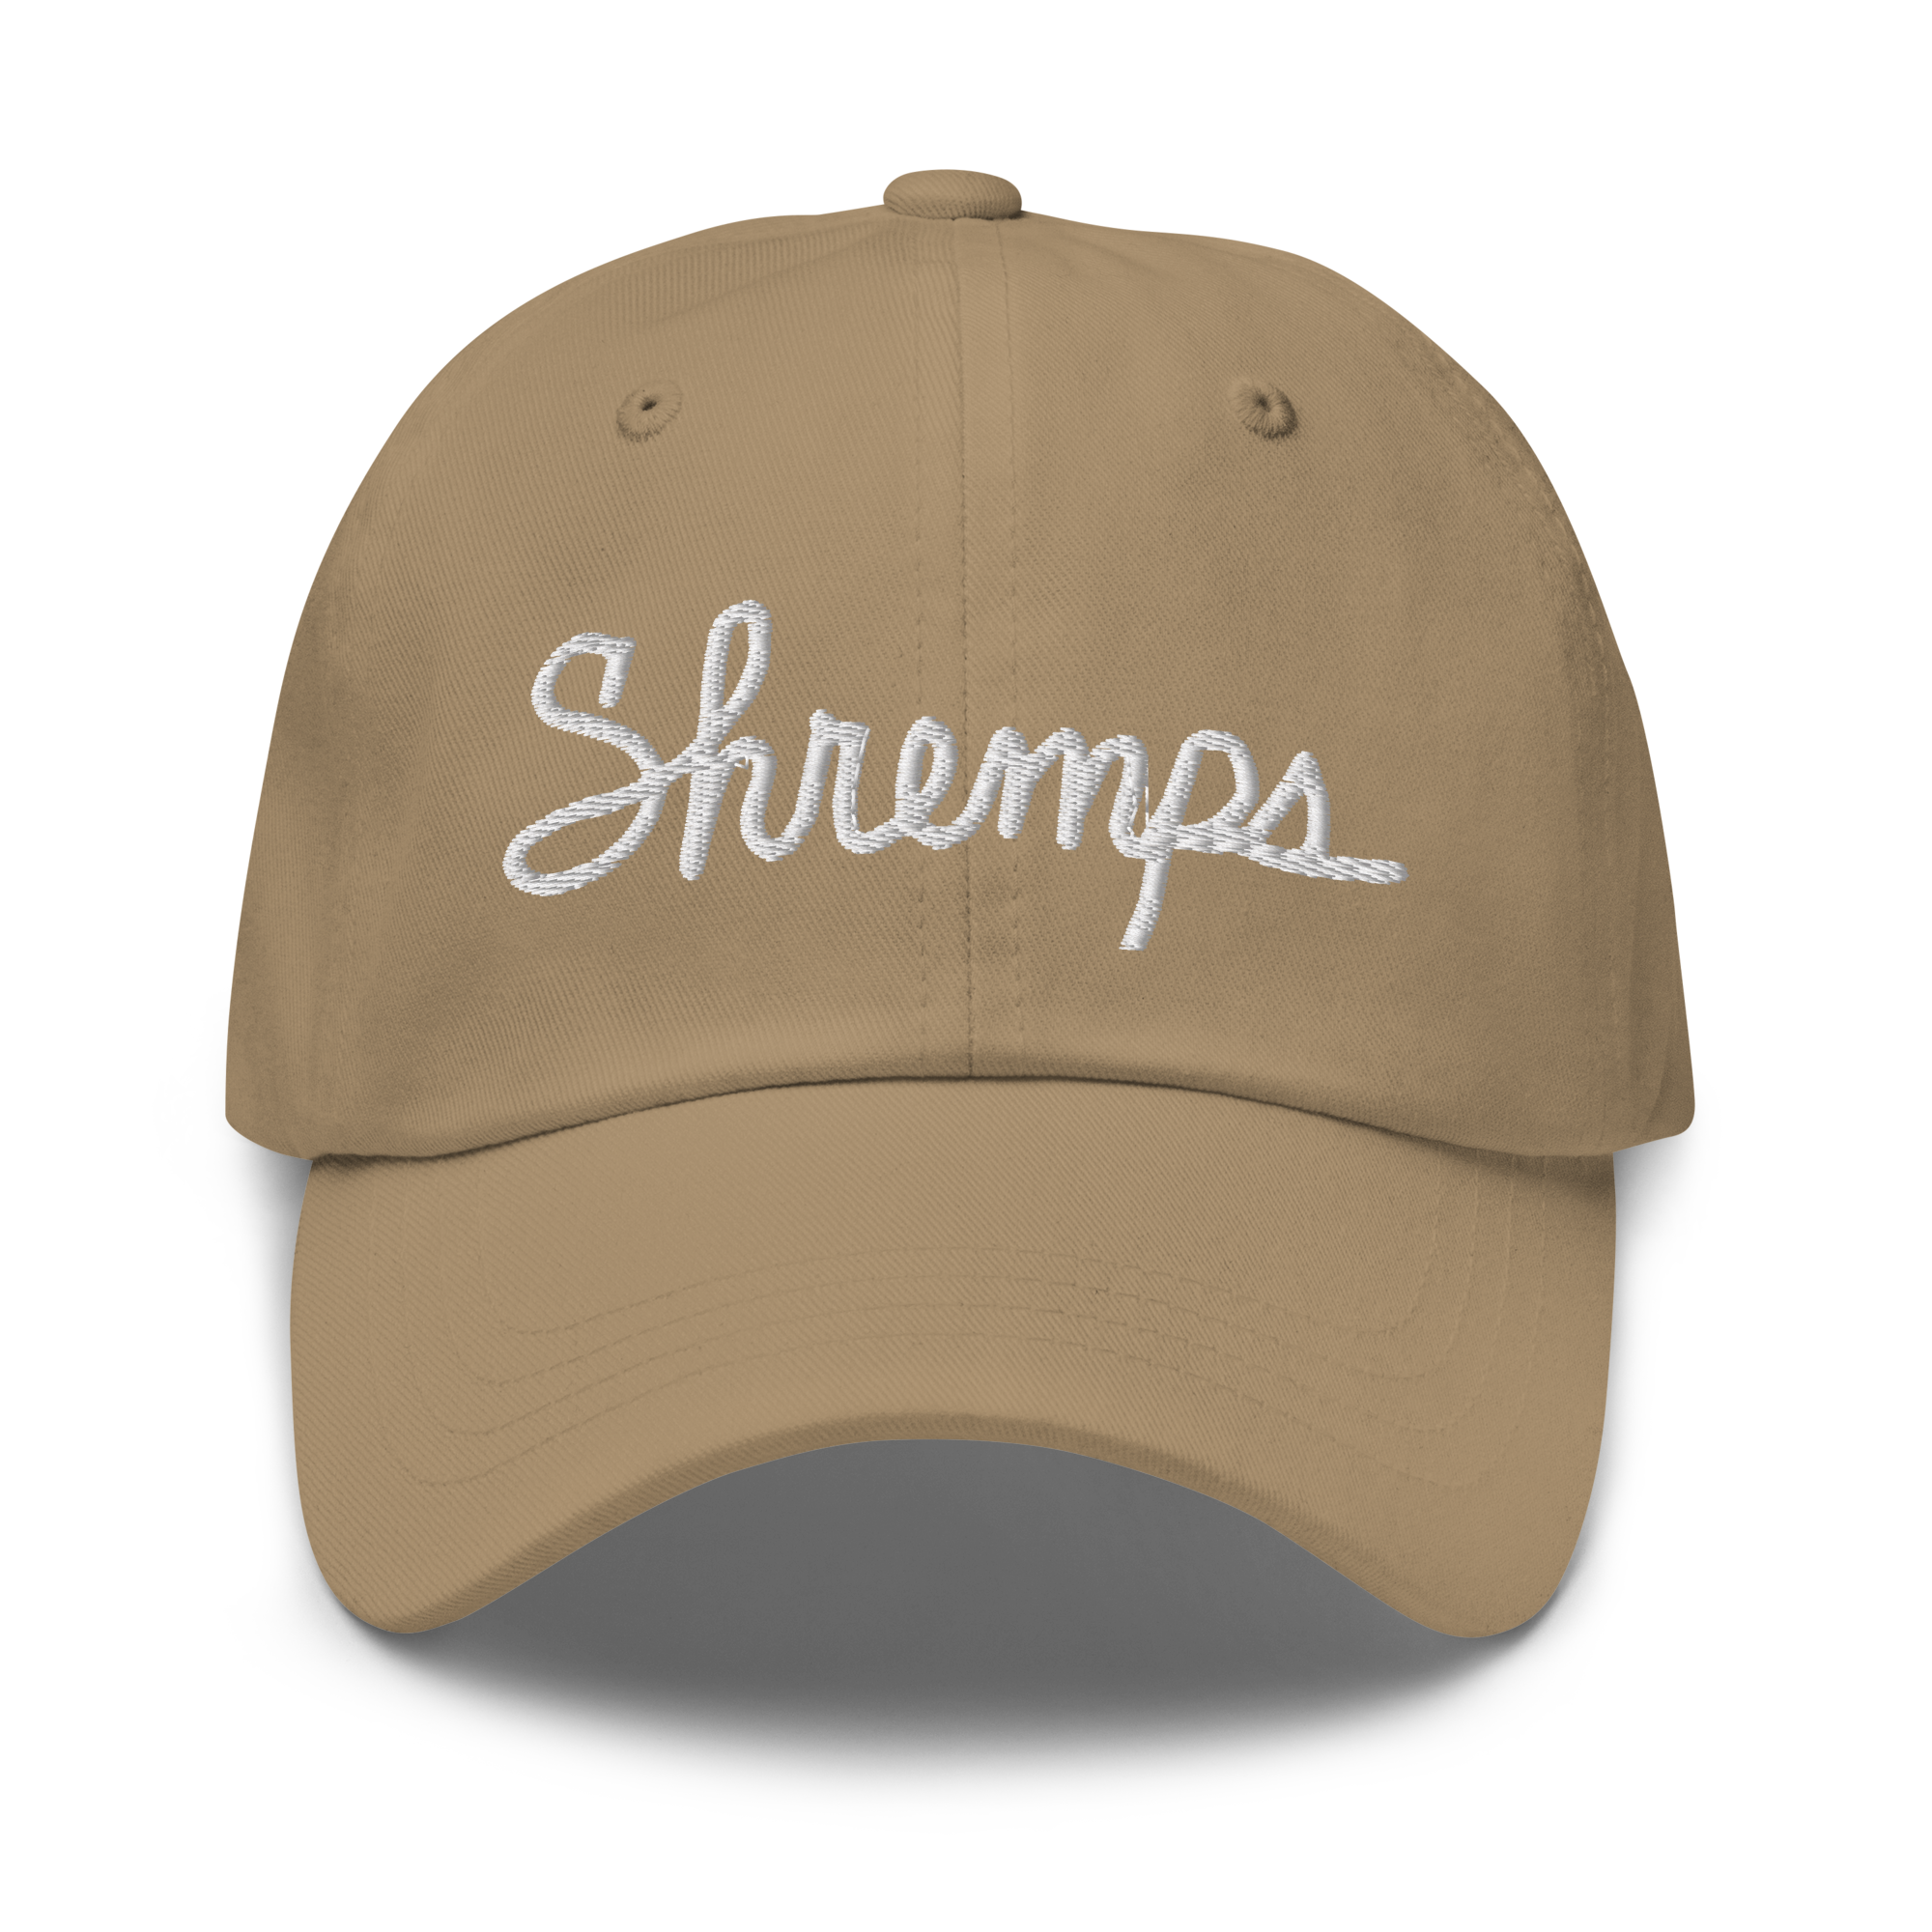 Shremps Cursive Dad Hat